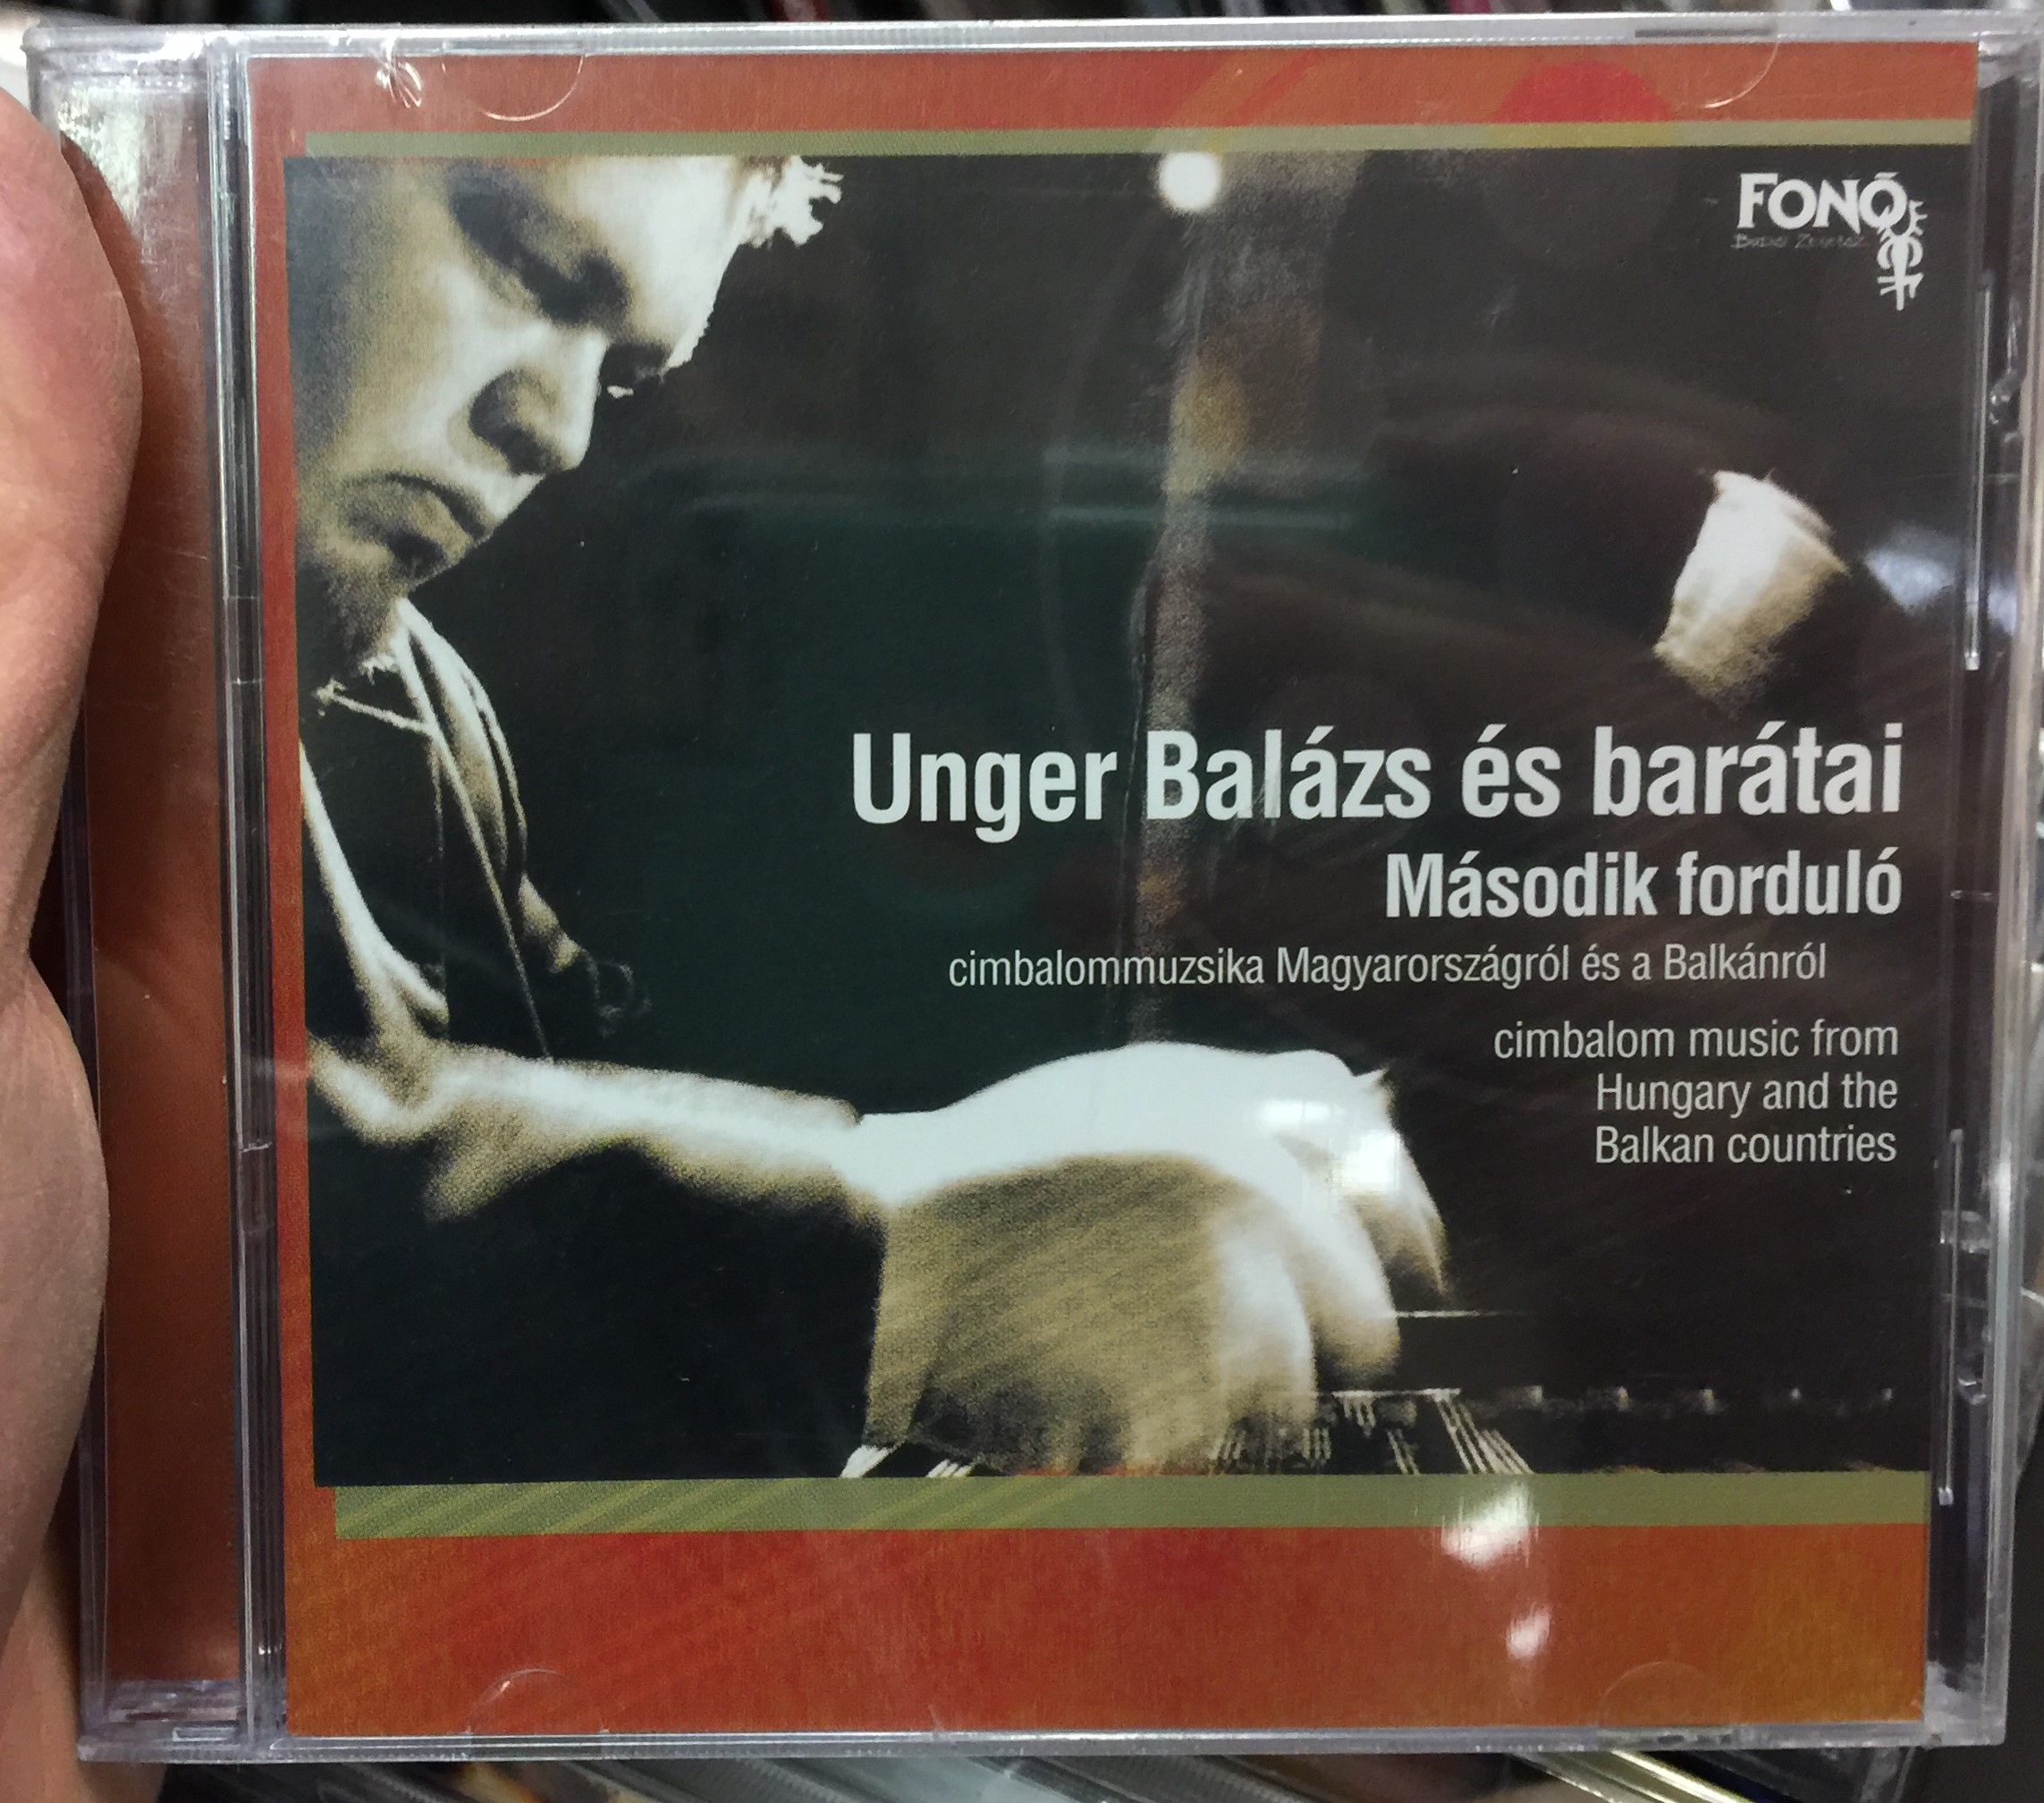 unger-balazs-es-baratai-masodik-fordulo-cimbalommuzsika-magyarorszagrol-es-a-balkanrol-cimbalom-music-from-hungary-and-the-balkan-countries-fono-budai-zenehaz-audio-cd-2005-5998048522026-1-.jpg